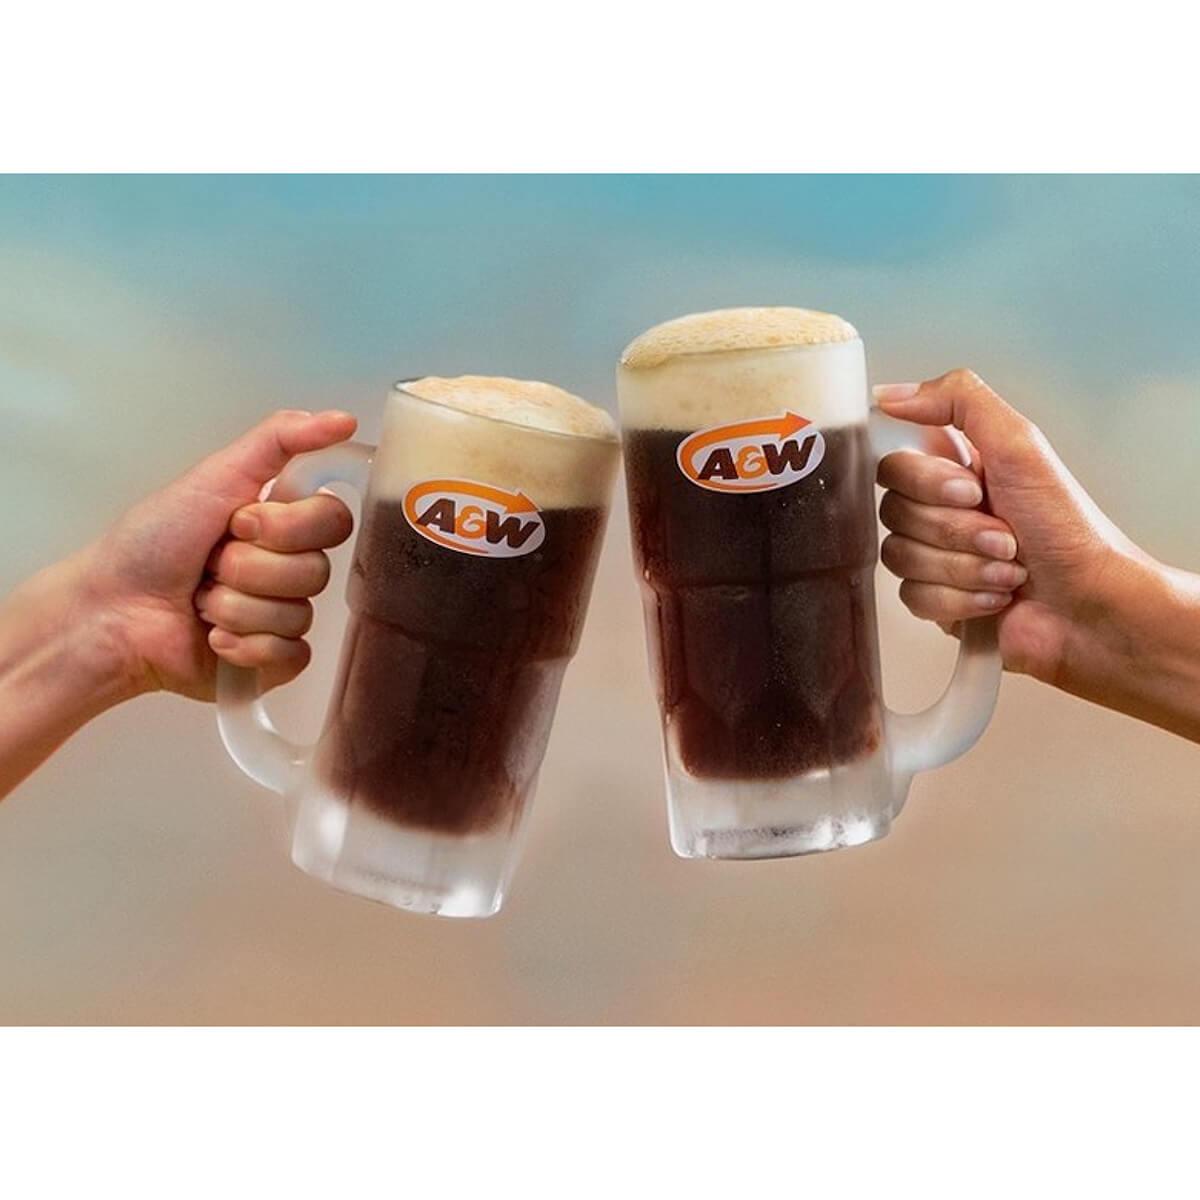 GGO.ae A&W Root Beer Soft Drink - 12x354ml